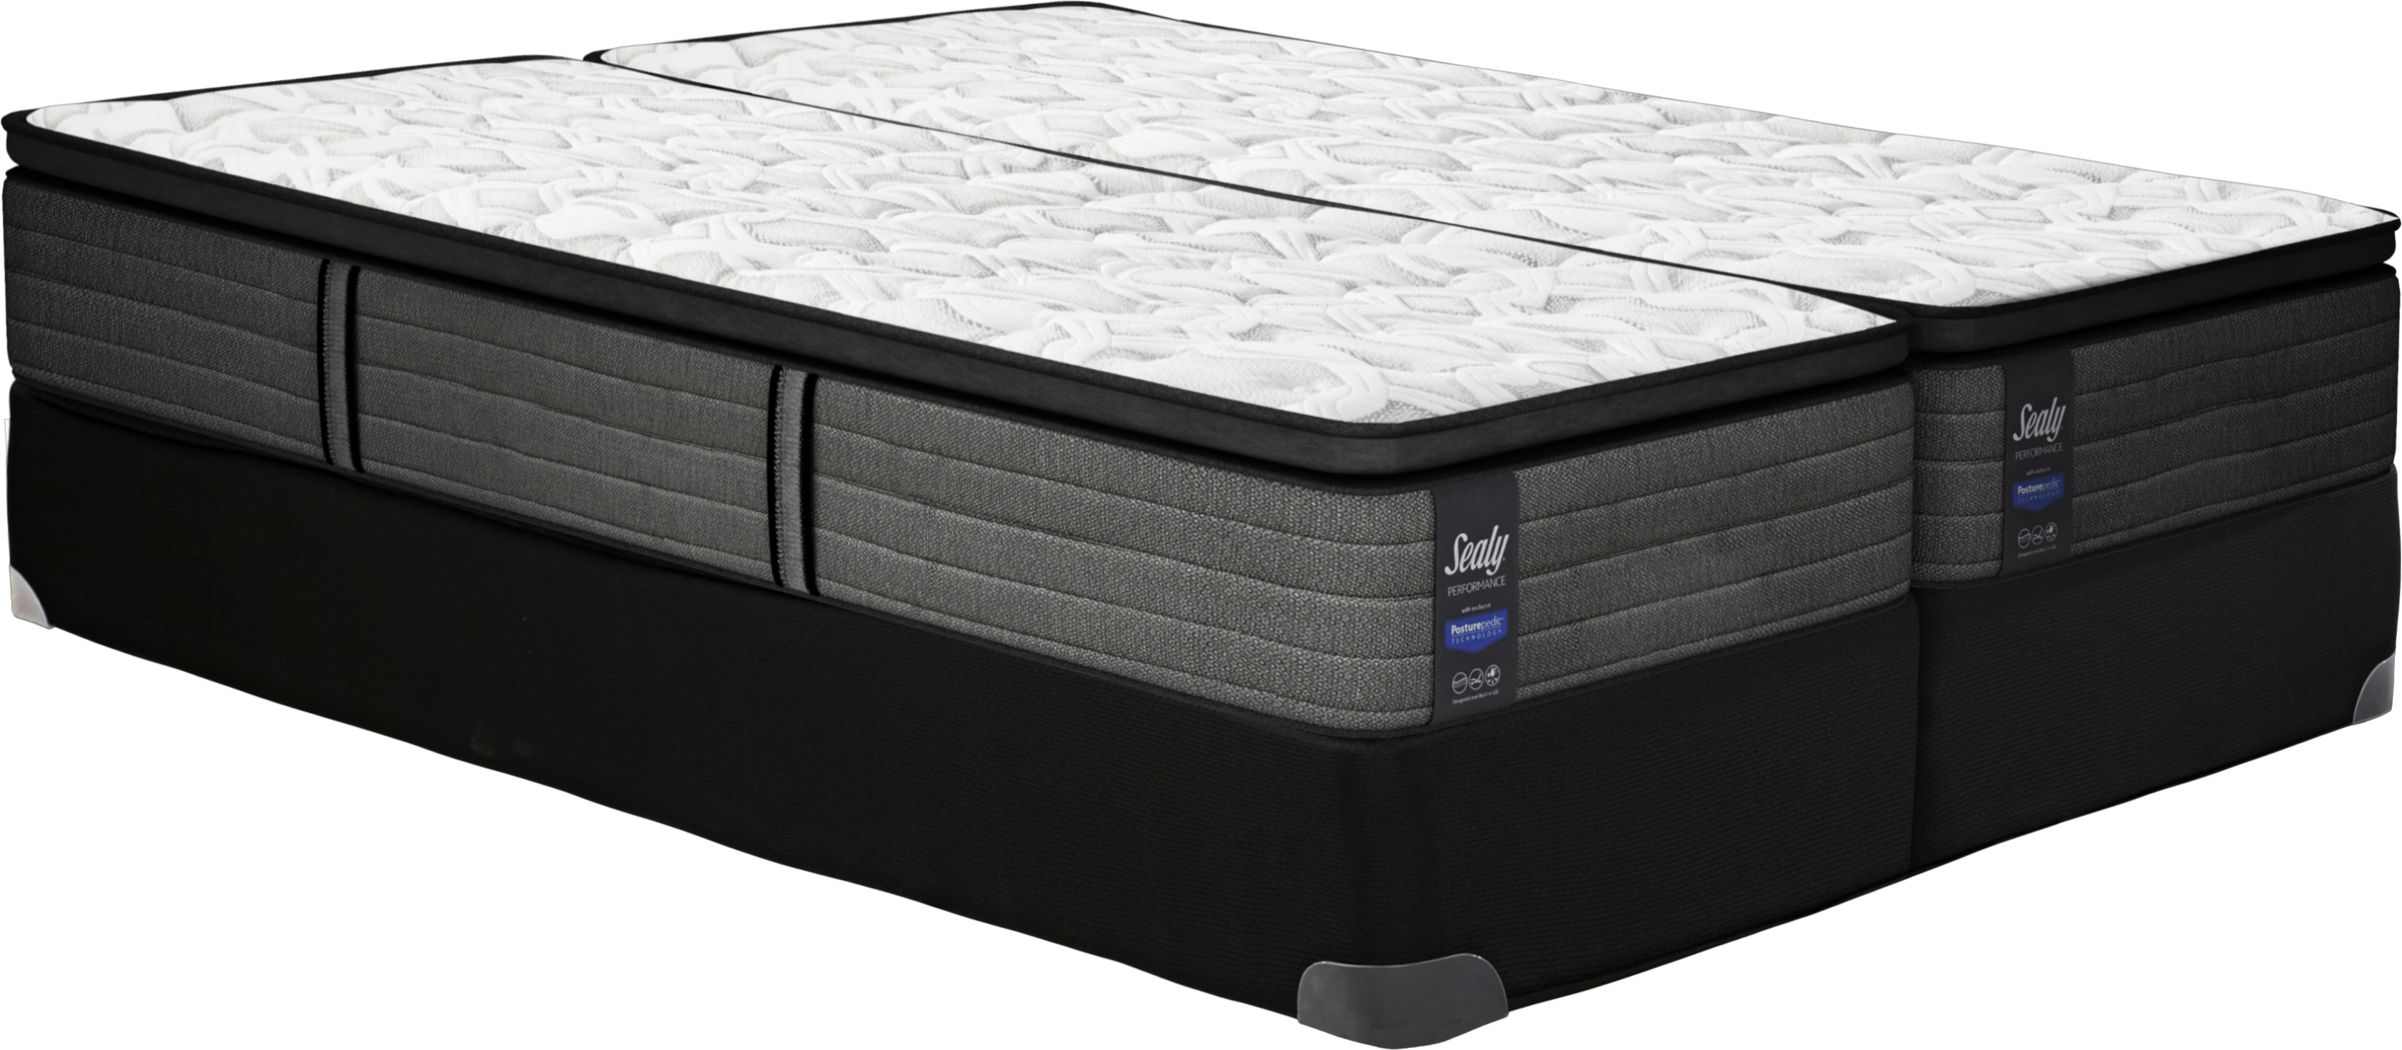 sealy paradise cove mattress reviews